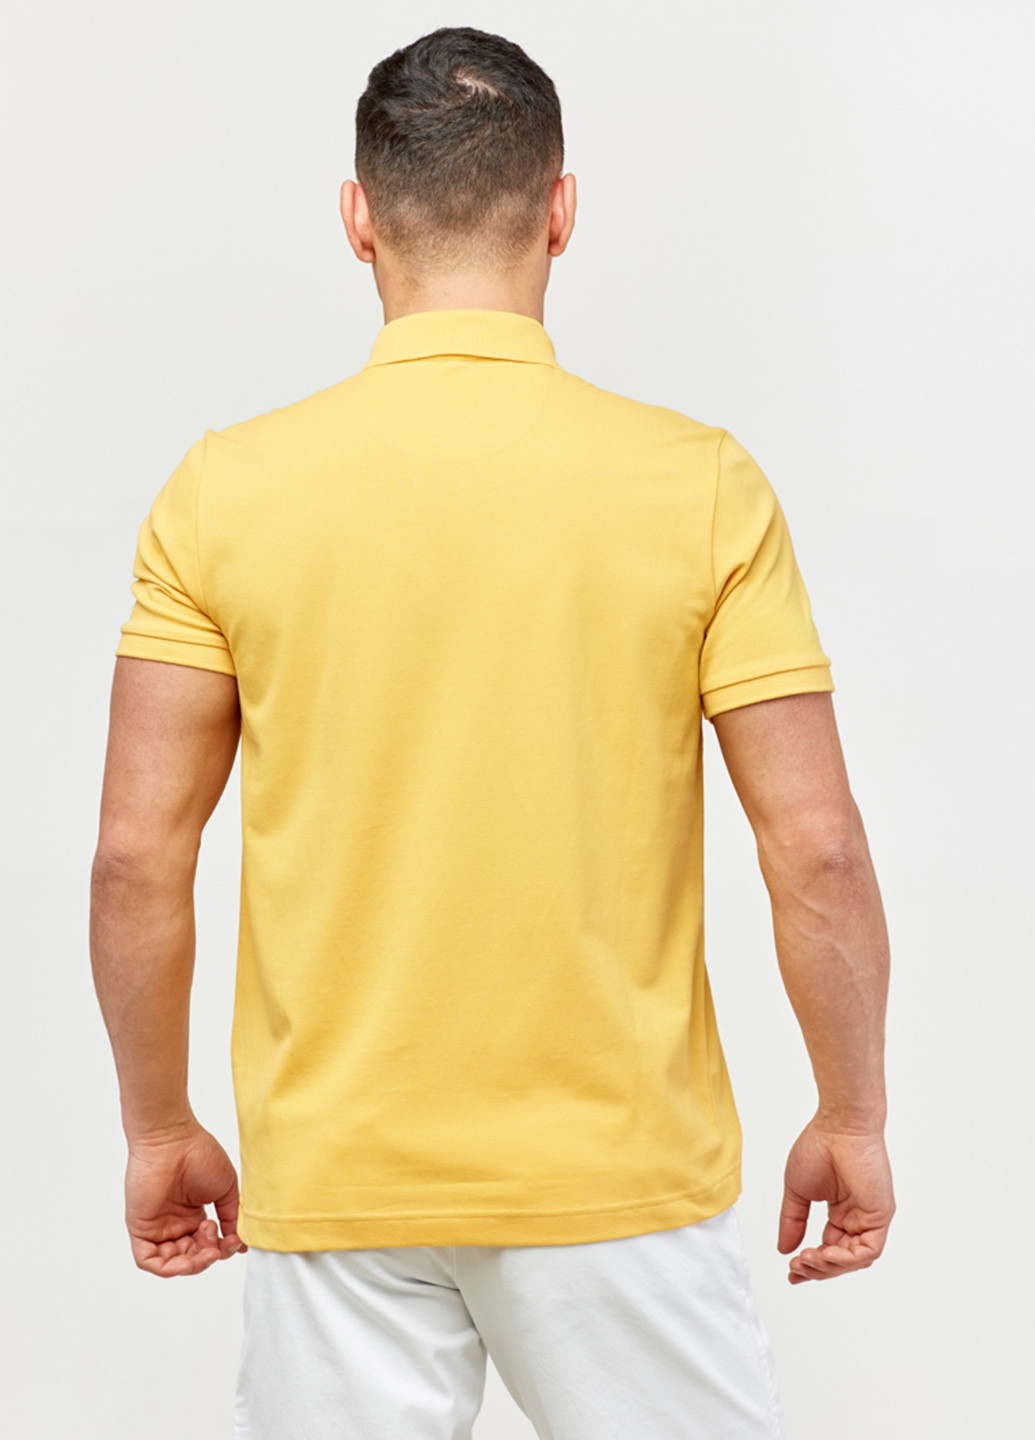 Желтая футболка-поло для мужчин Campione однотонная